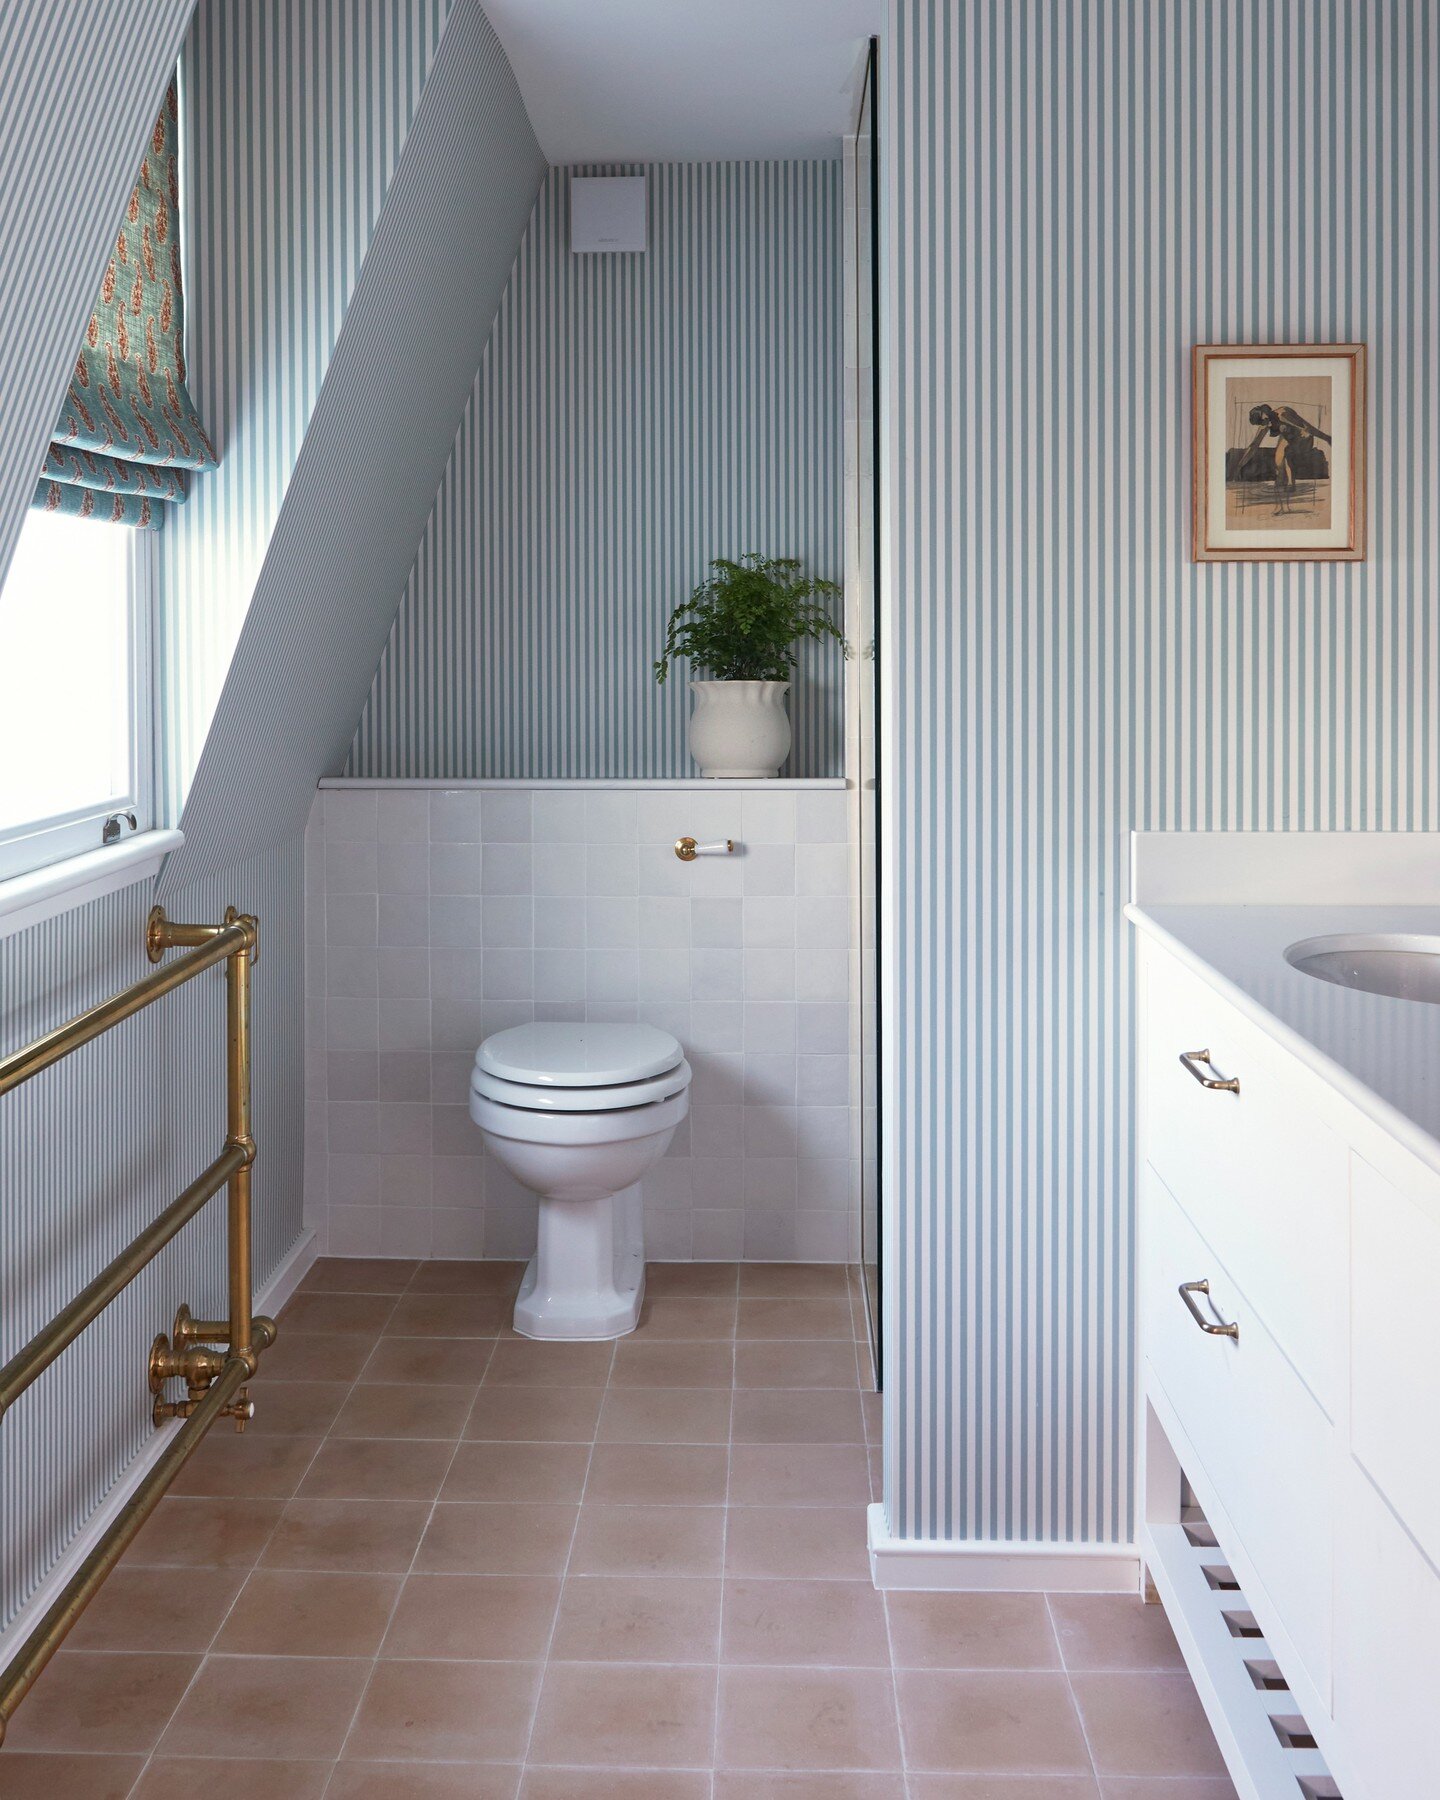 We do love a stripe! 🚽
#masterbathroom #londoninteriors #interiordesign #stripes #osbornehodge